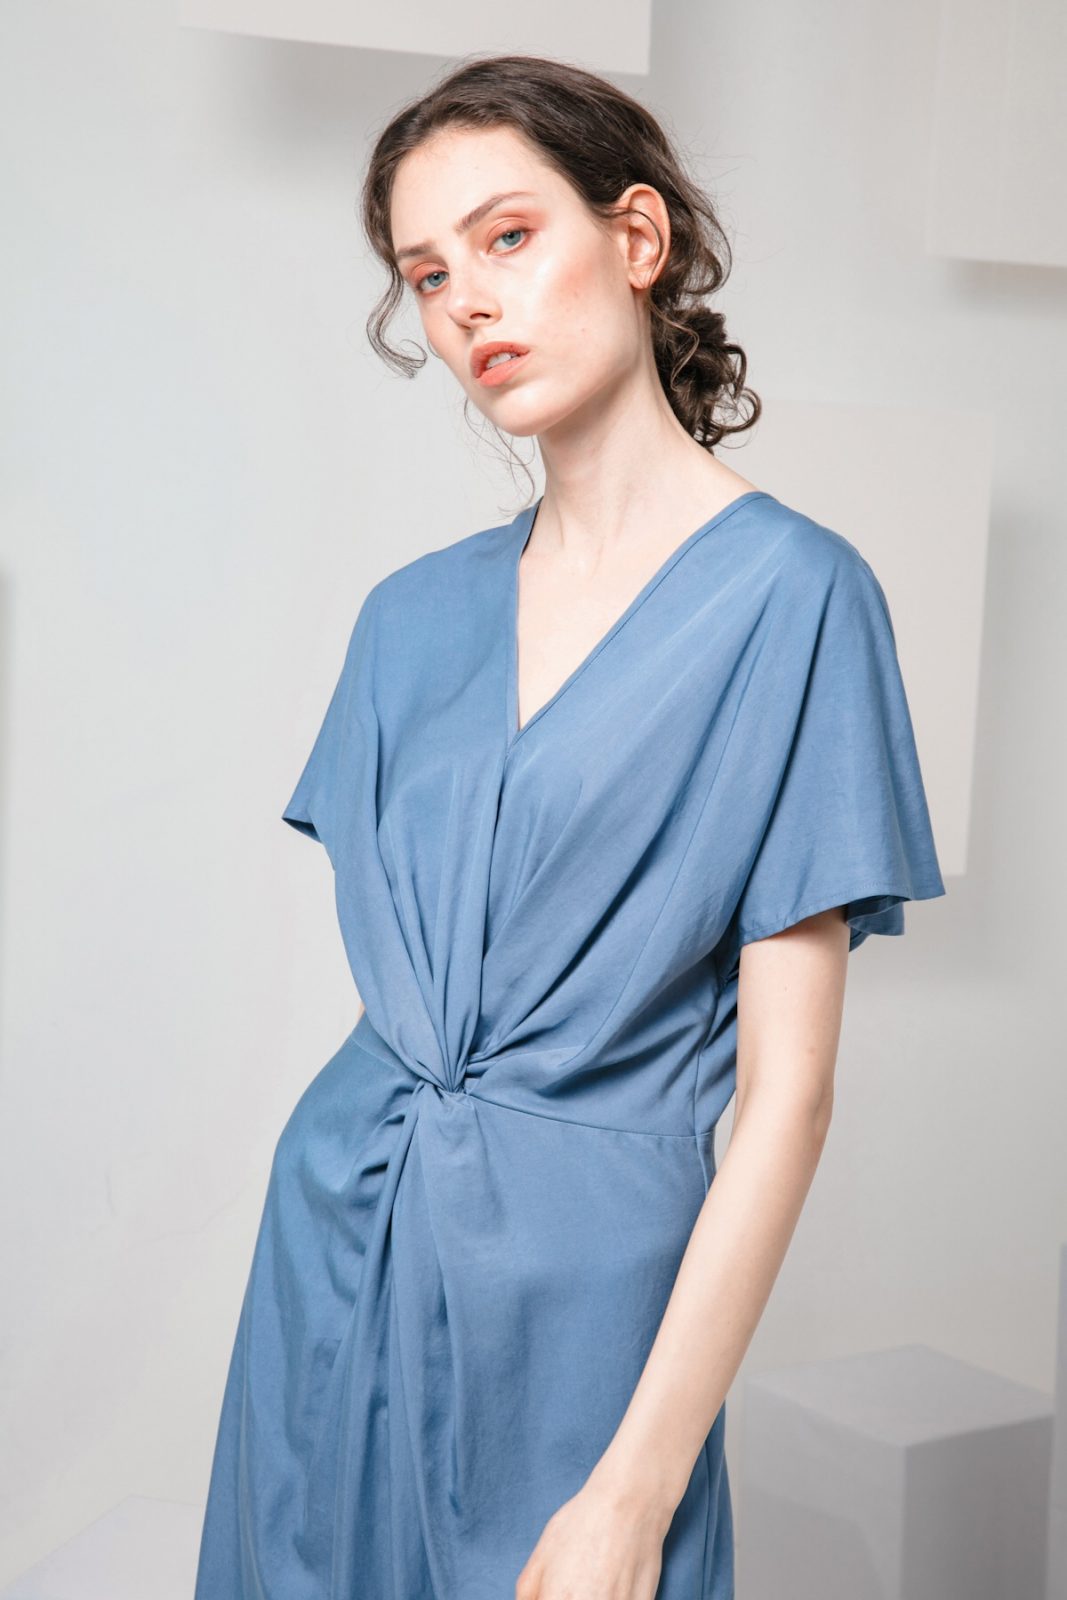 SKYE modern minimalist women clothing fashion Calla Dress blue 6